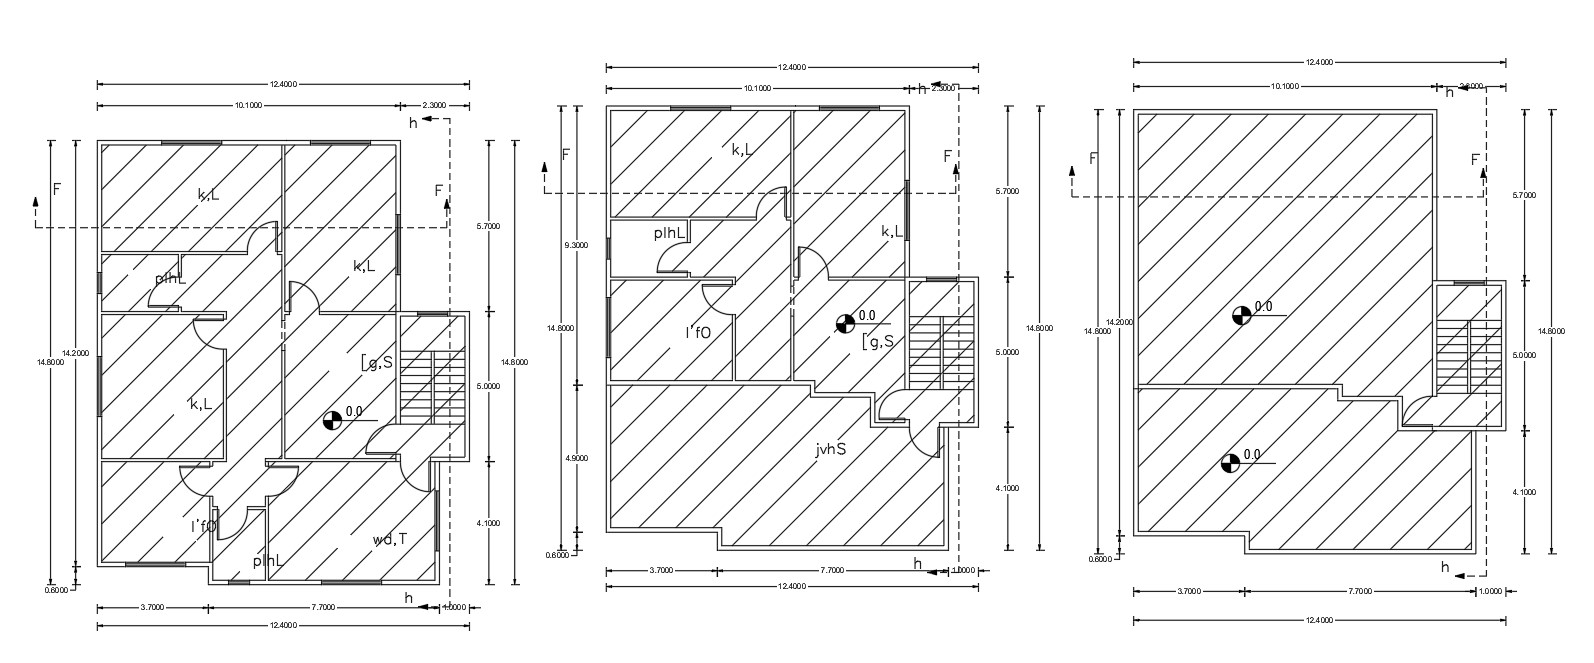 40 X 45 Feet House Plan (1800 Square Feet) - Cadbull